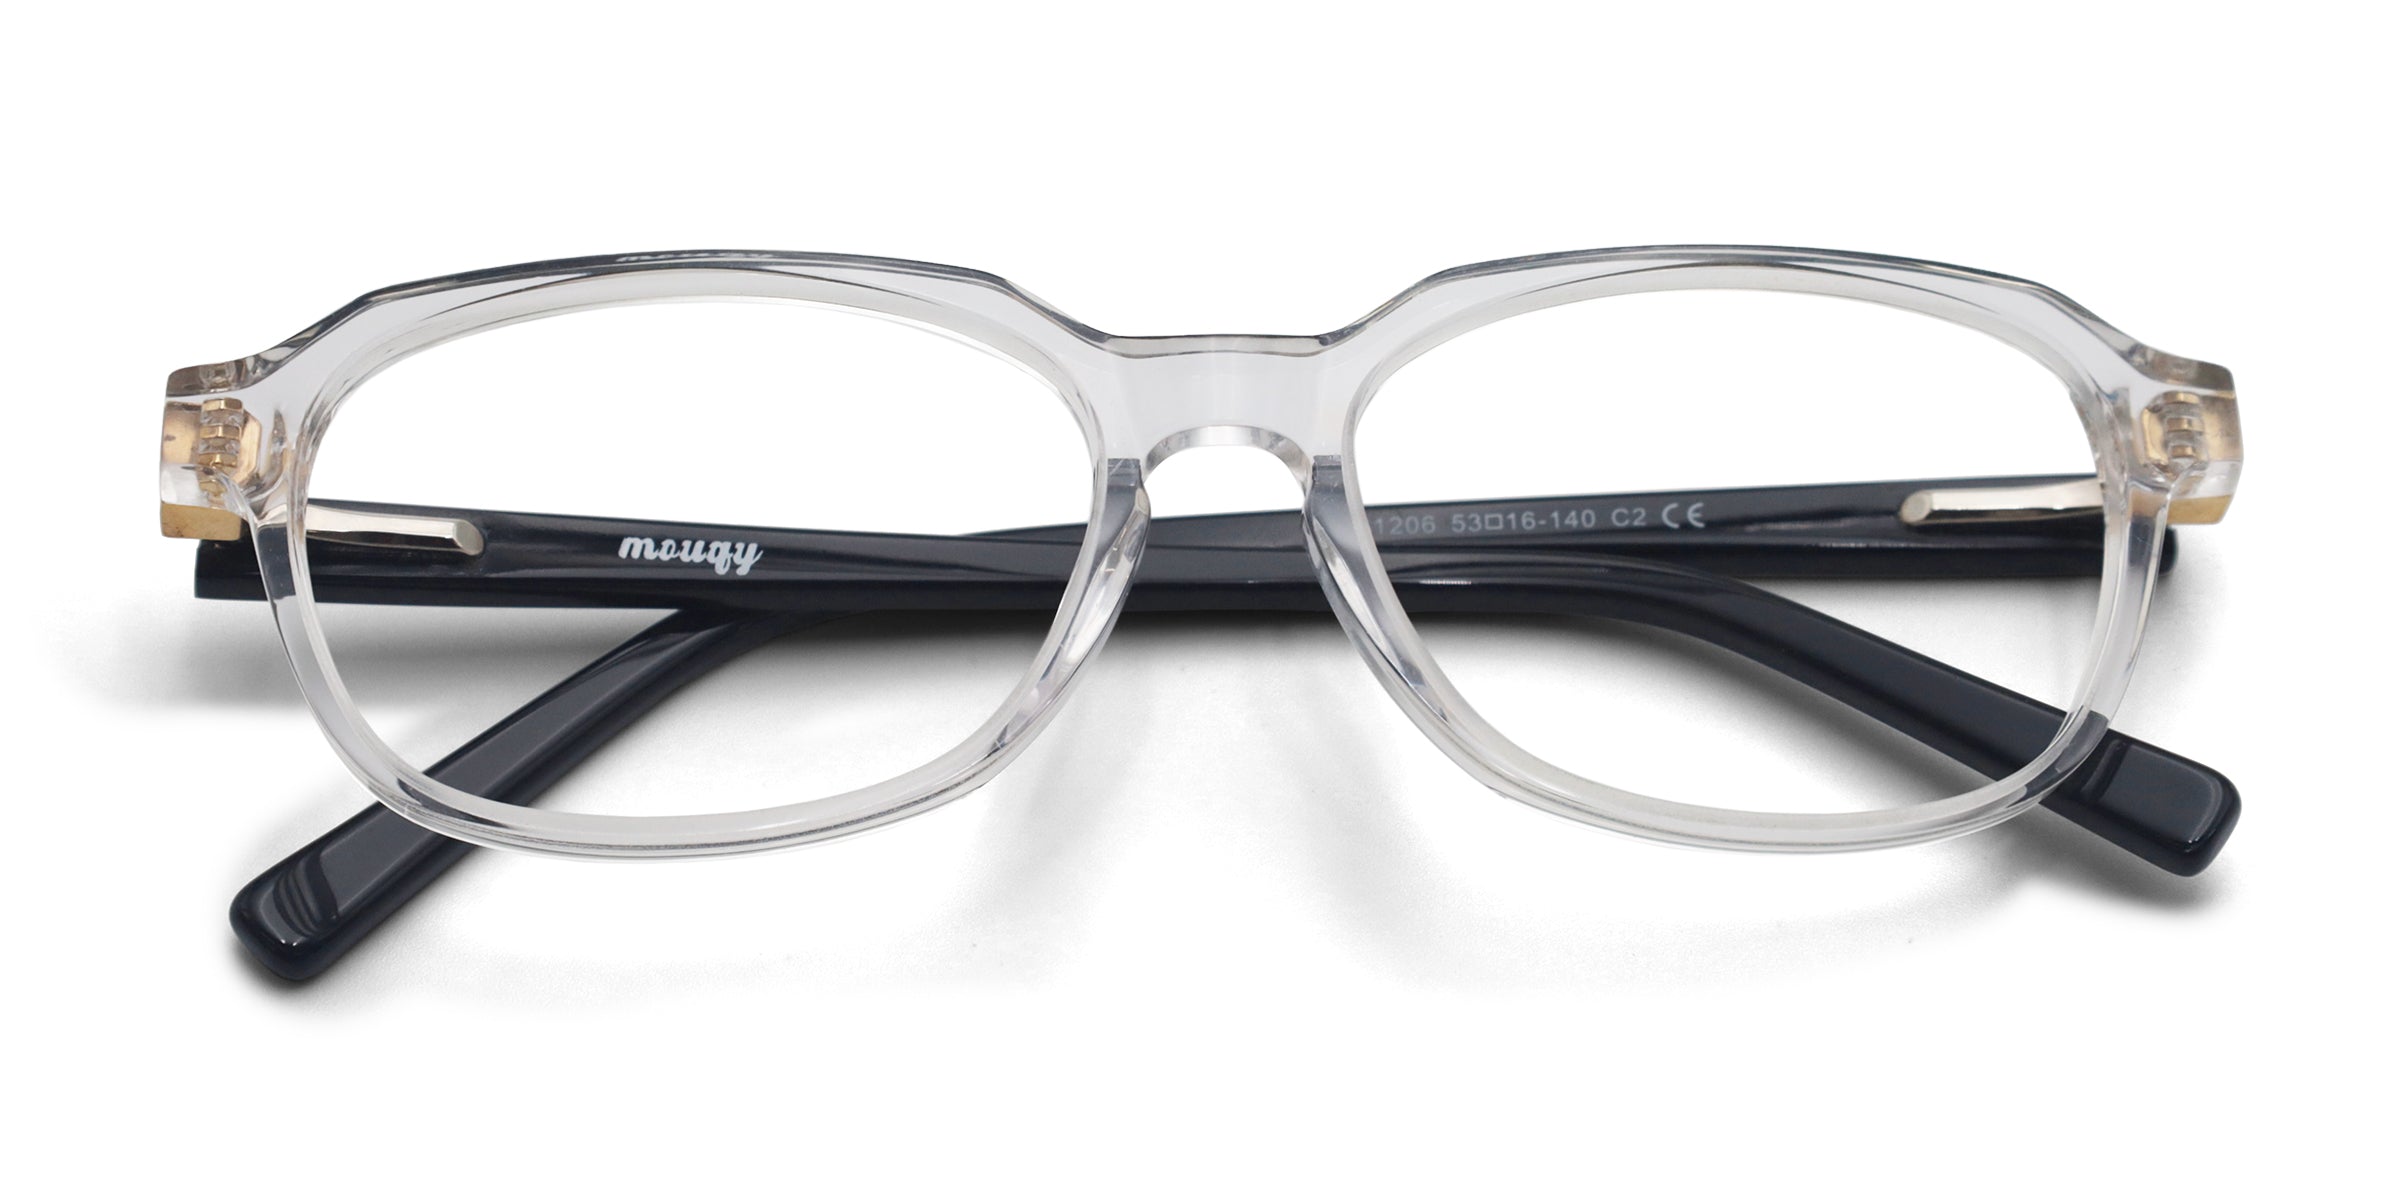 Dan Rectangle Clear Black eyeglasses frames top view